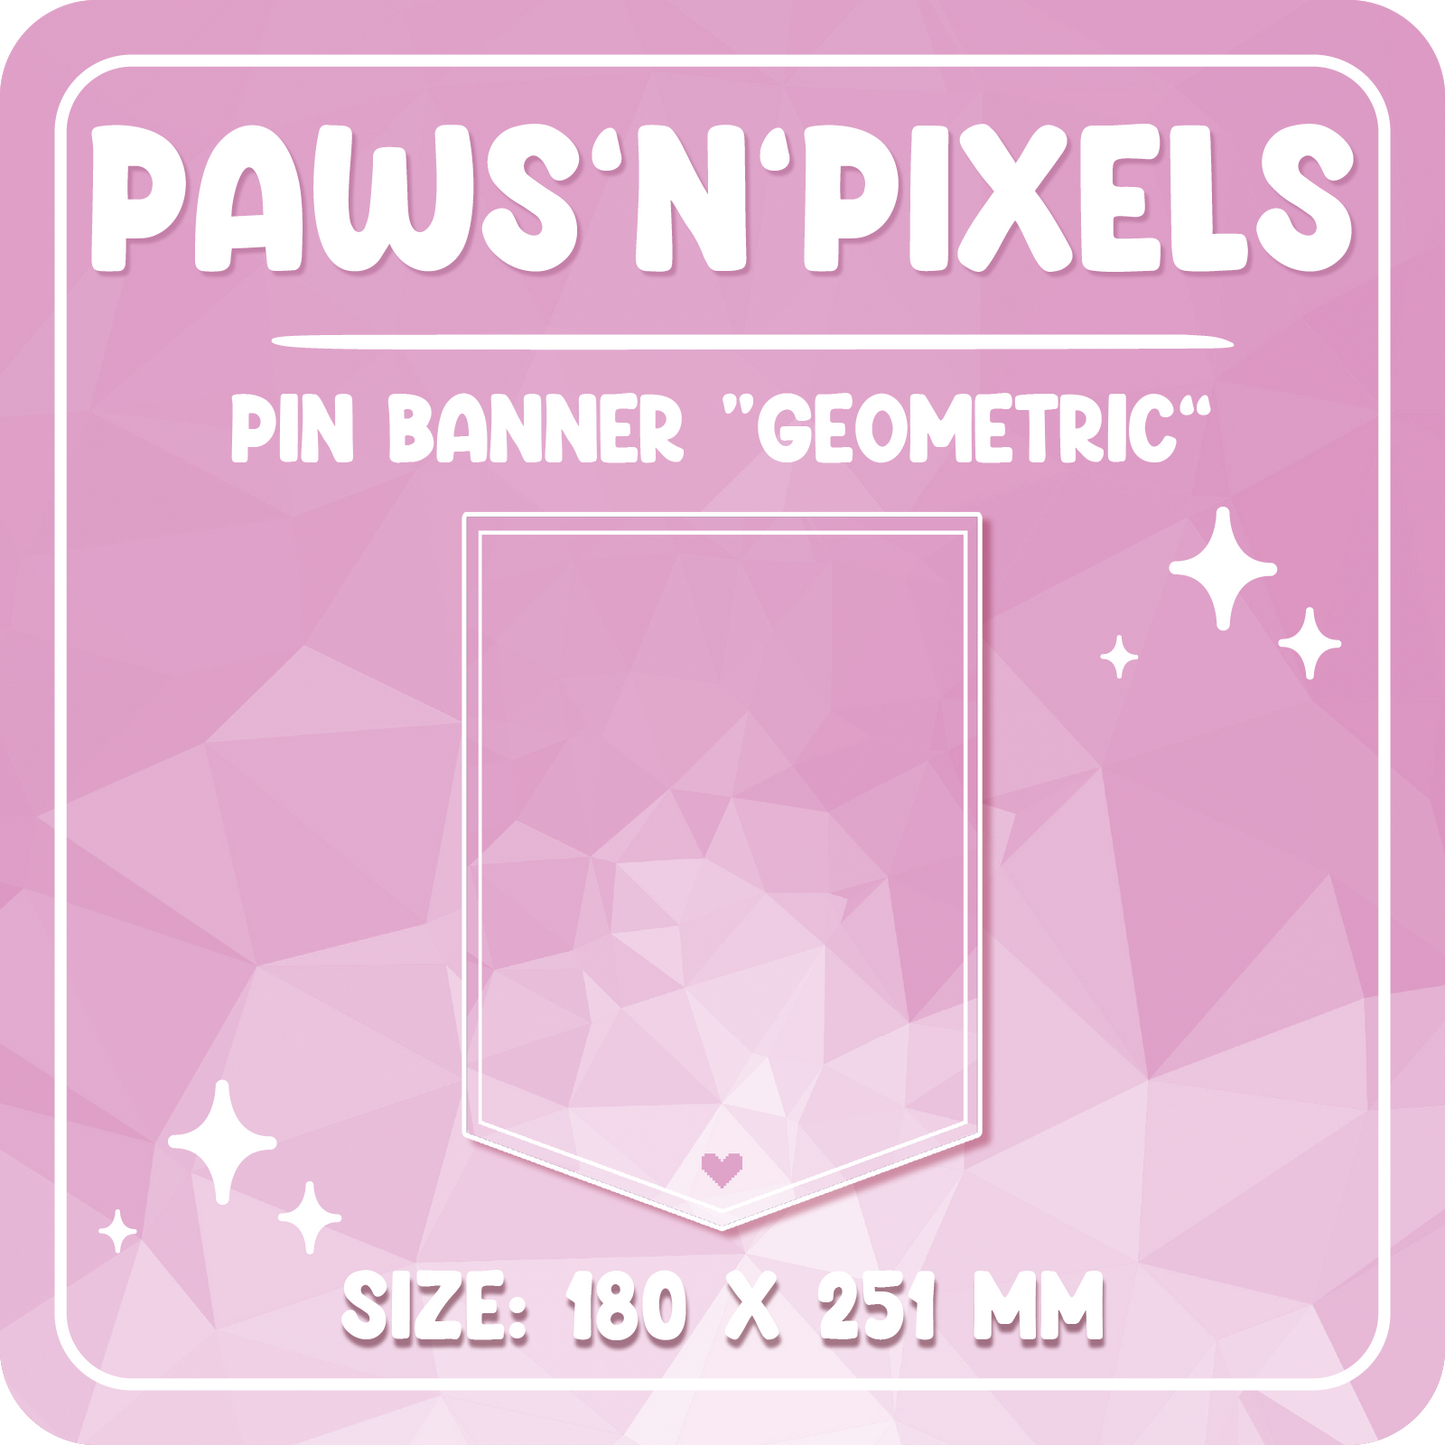 Paws'n'Pixels "Geometric" Canvas Pin Banner